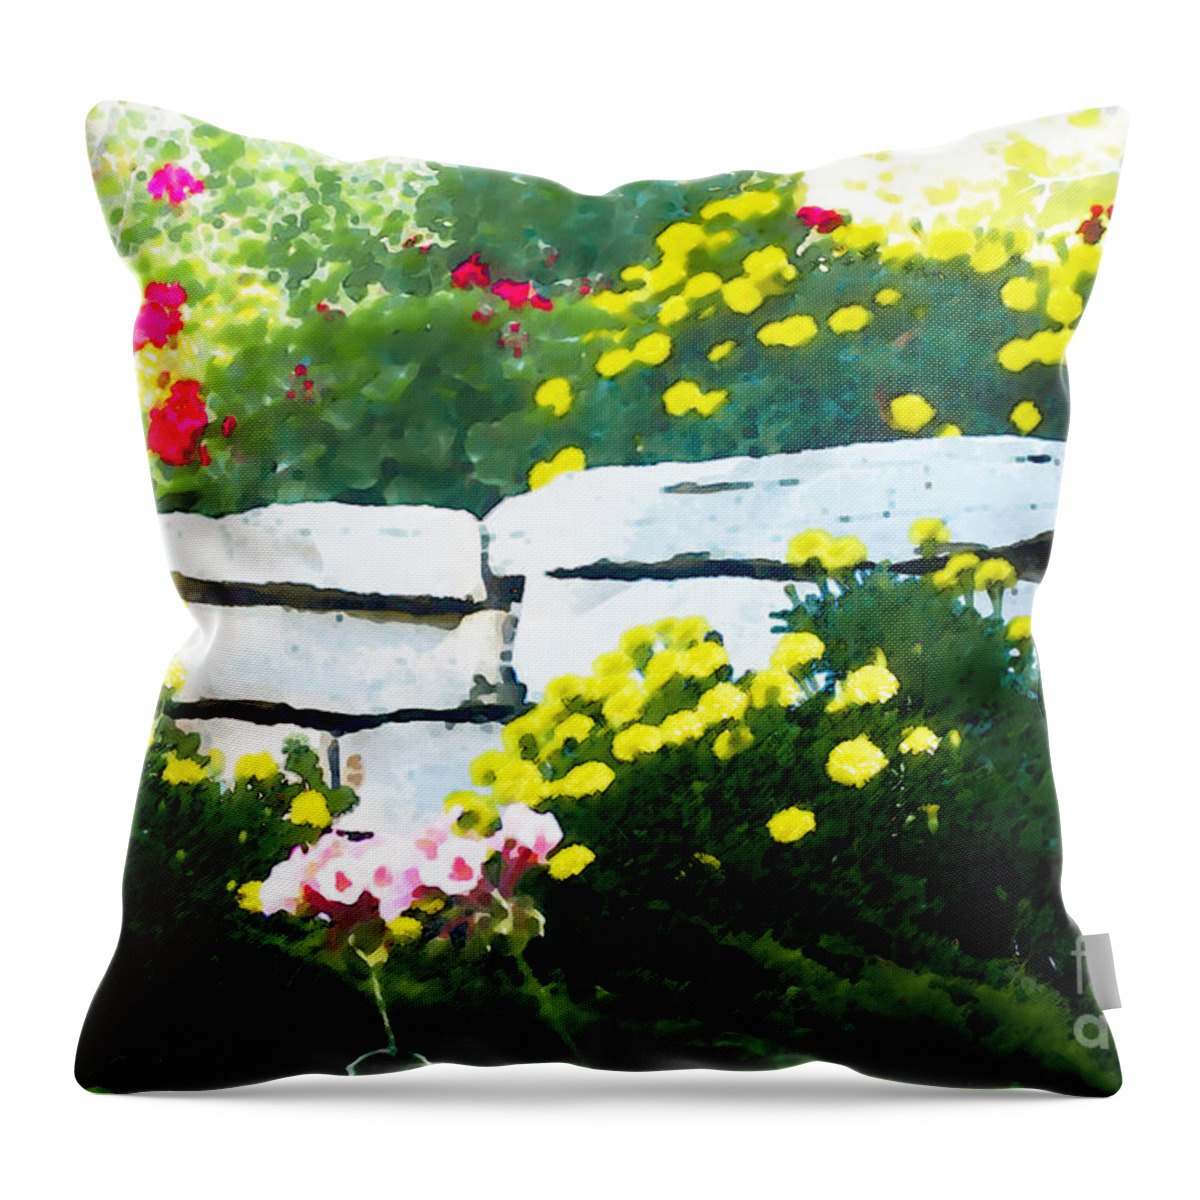 Botanical Throw Pillow featuring the digital art The Garden Wall by David Blank